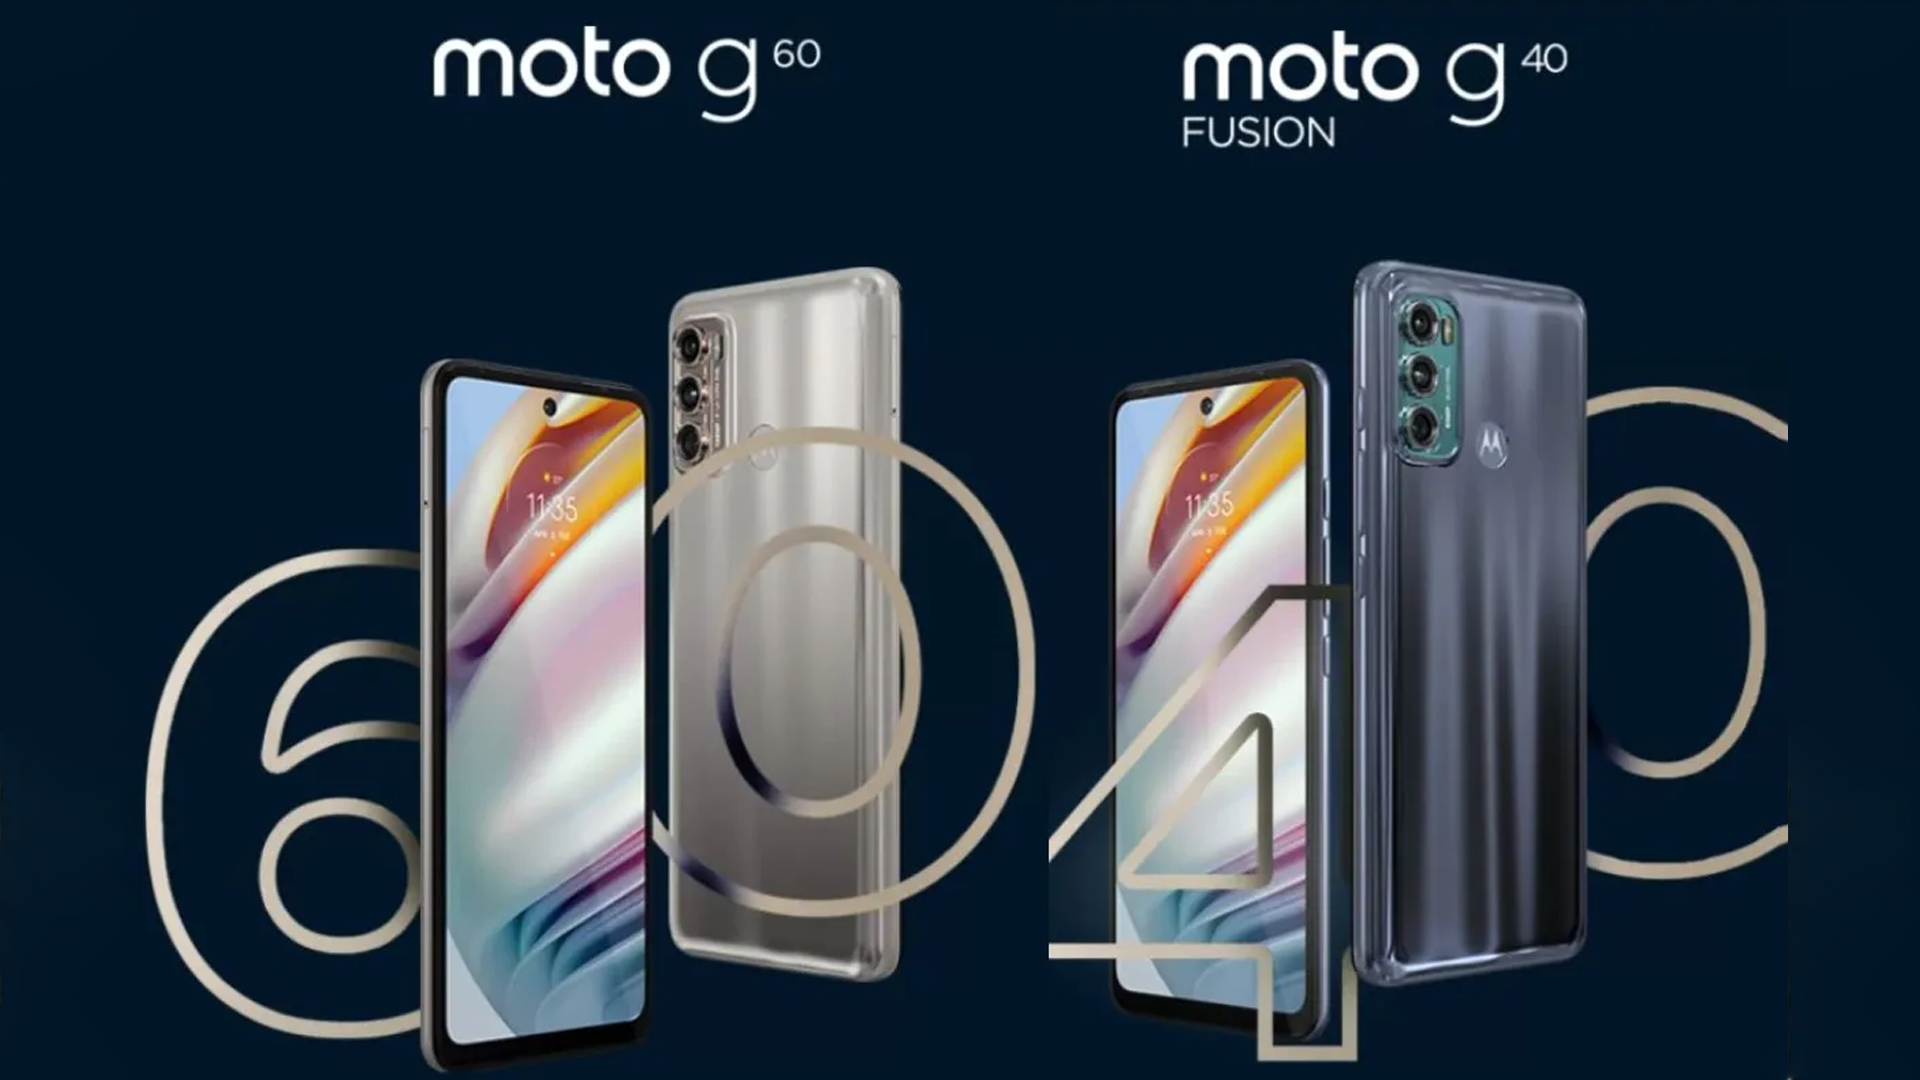 Motorola moto g40 Fusion and g60